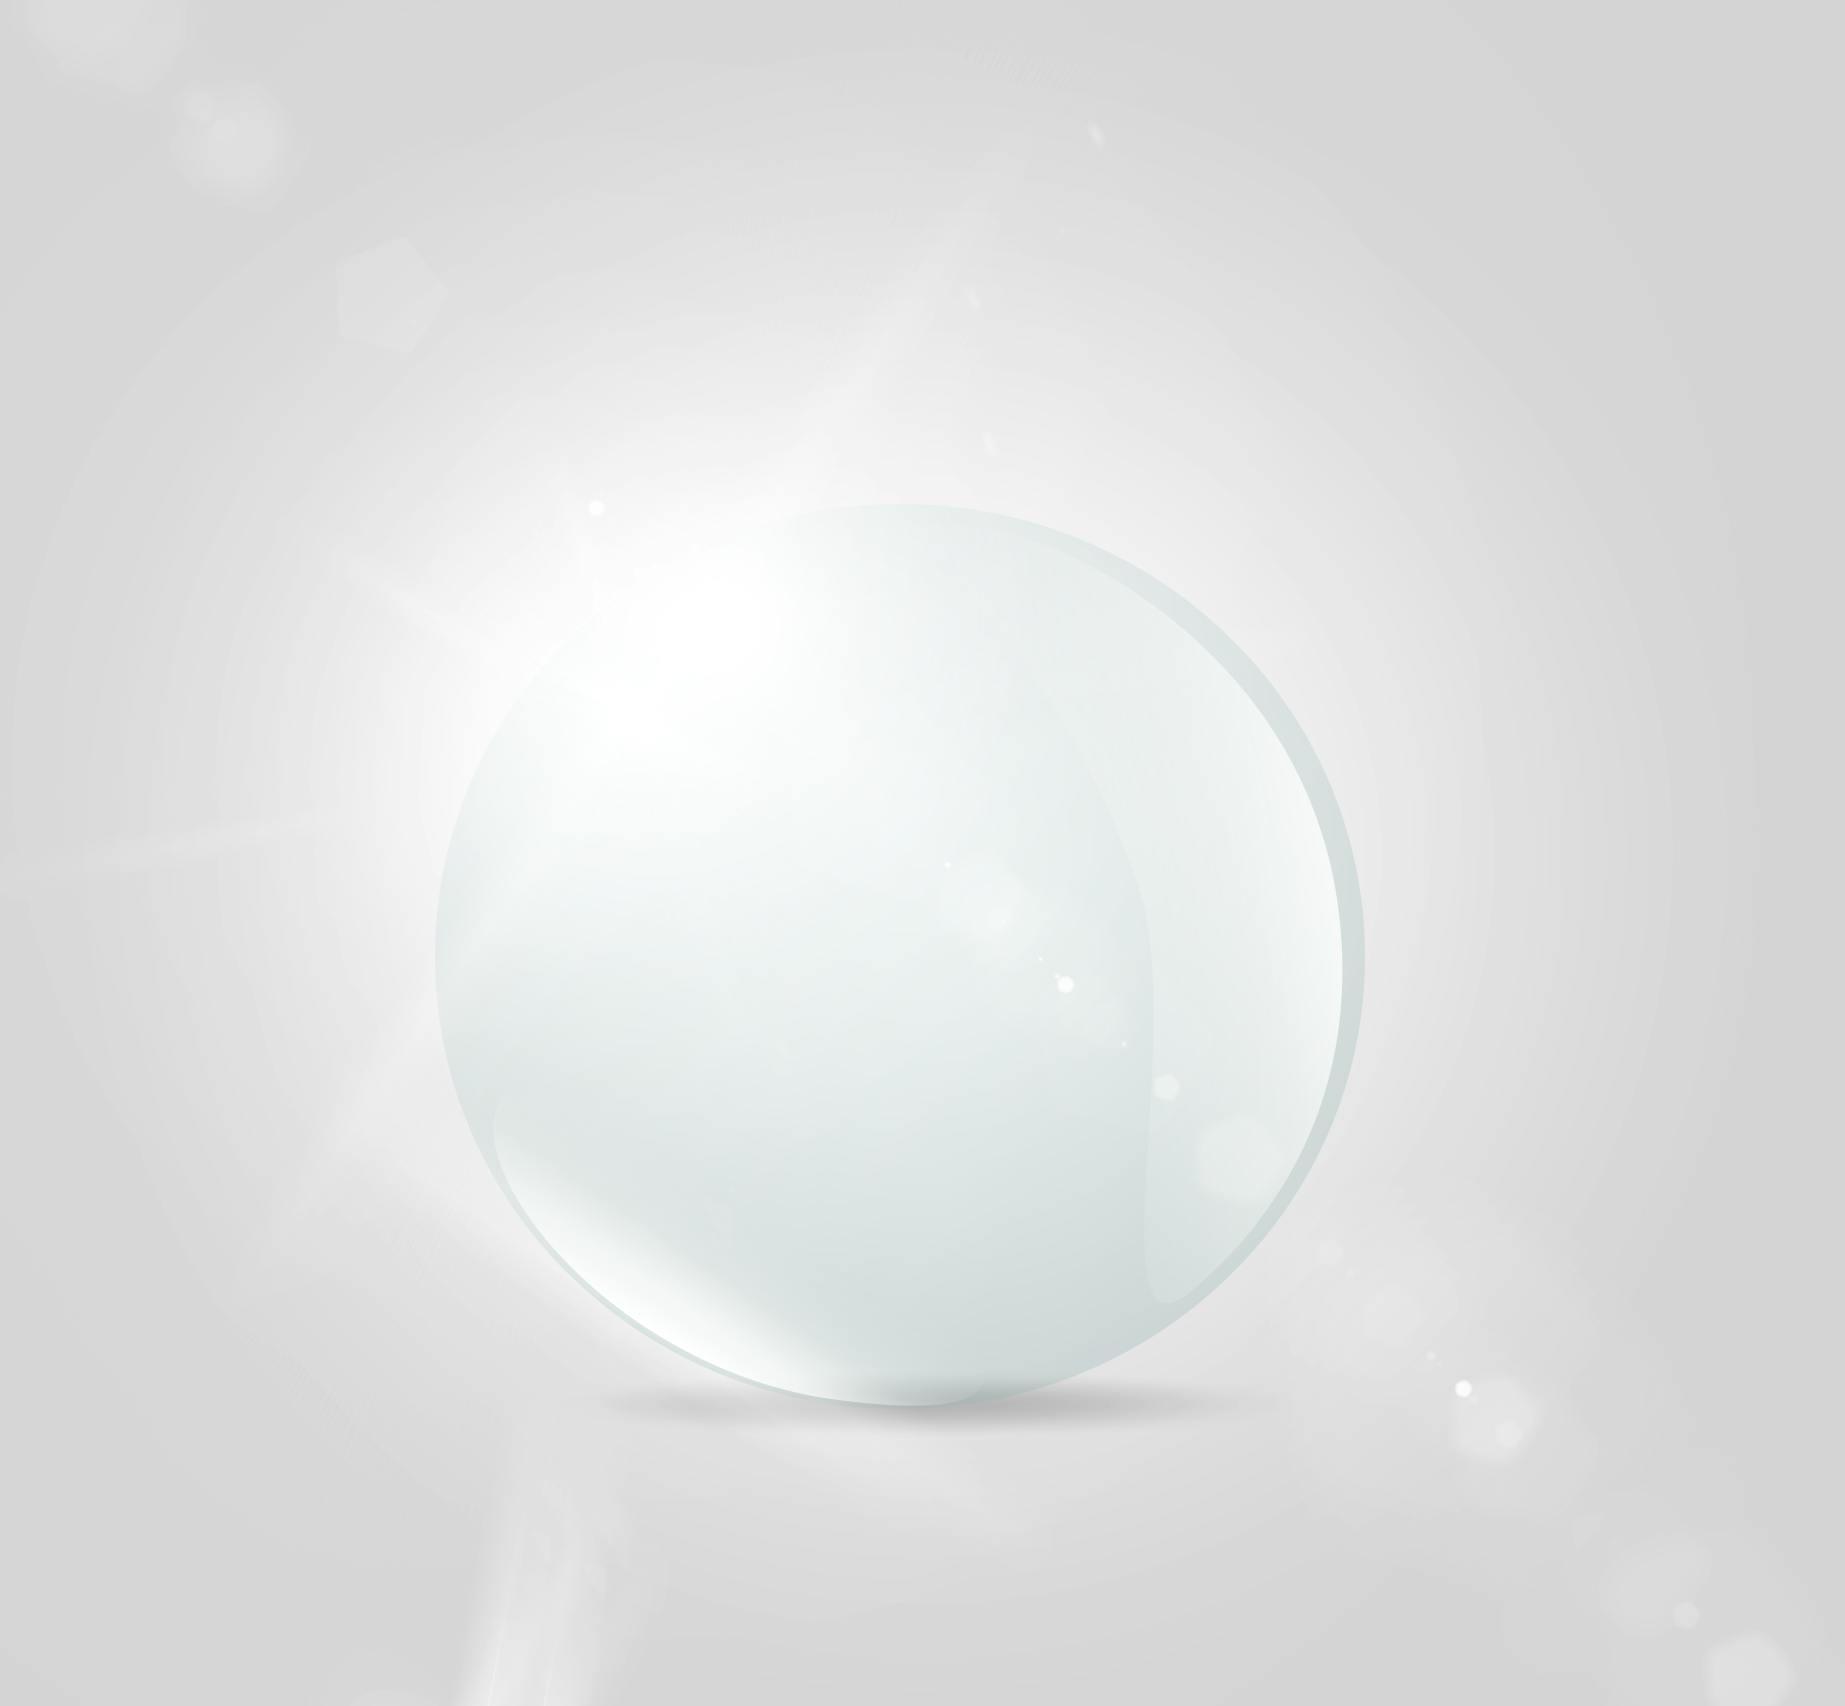 Free stock photo of Sphere pure shine bright